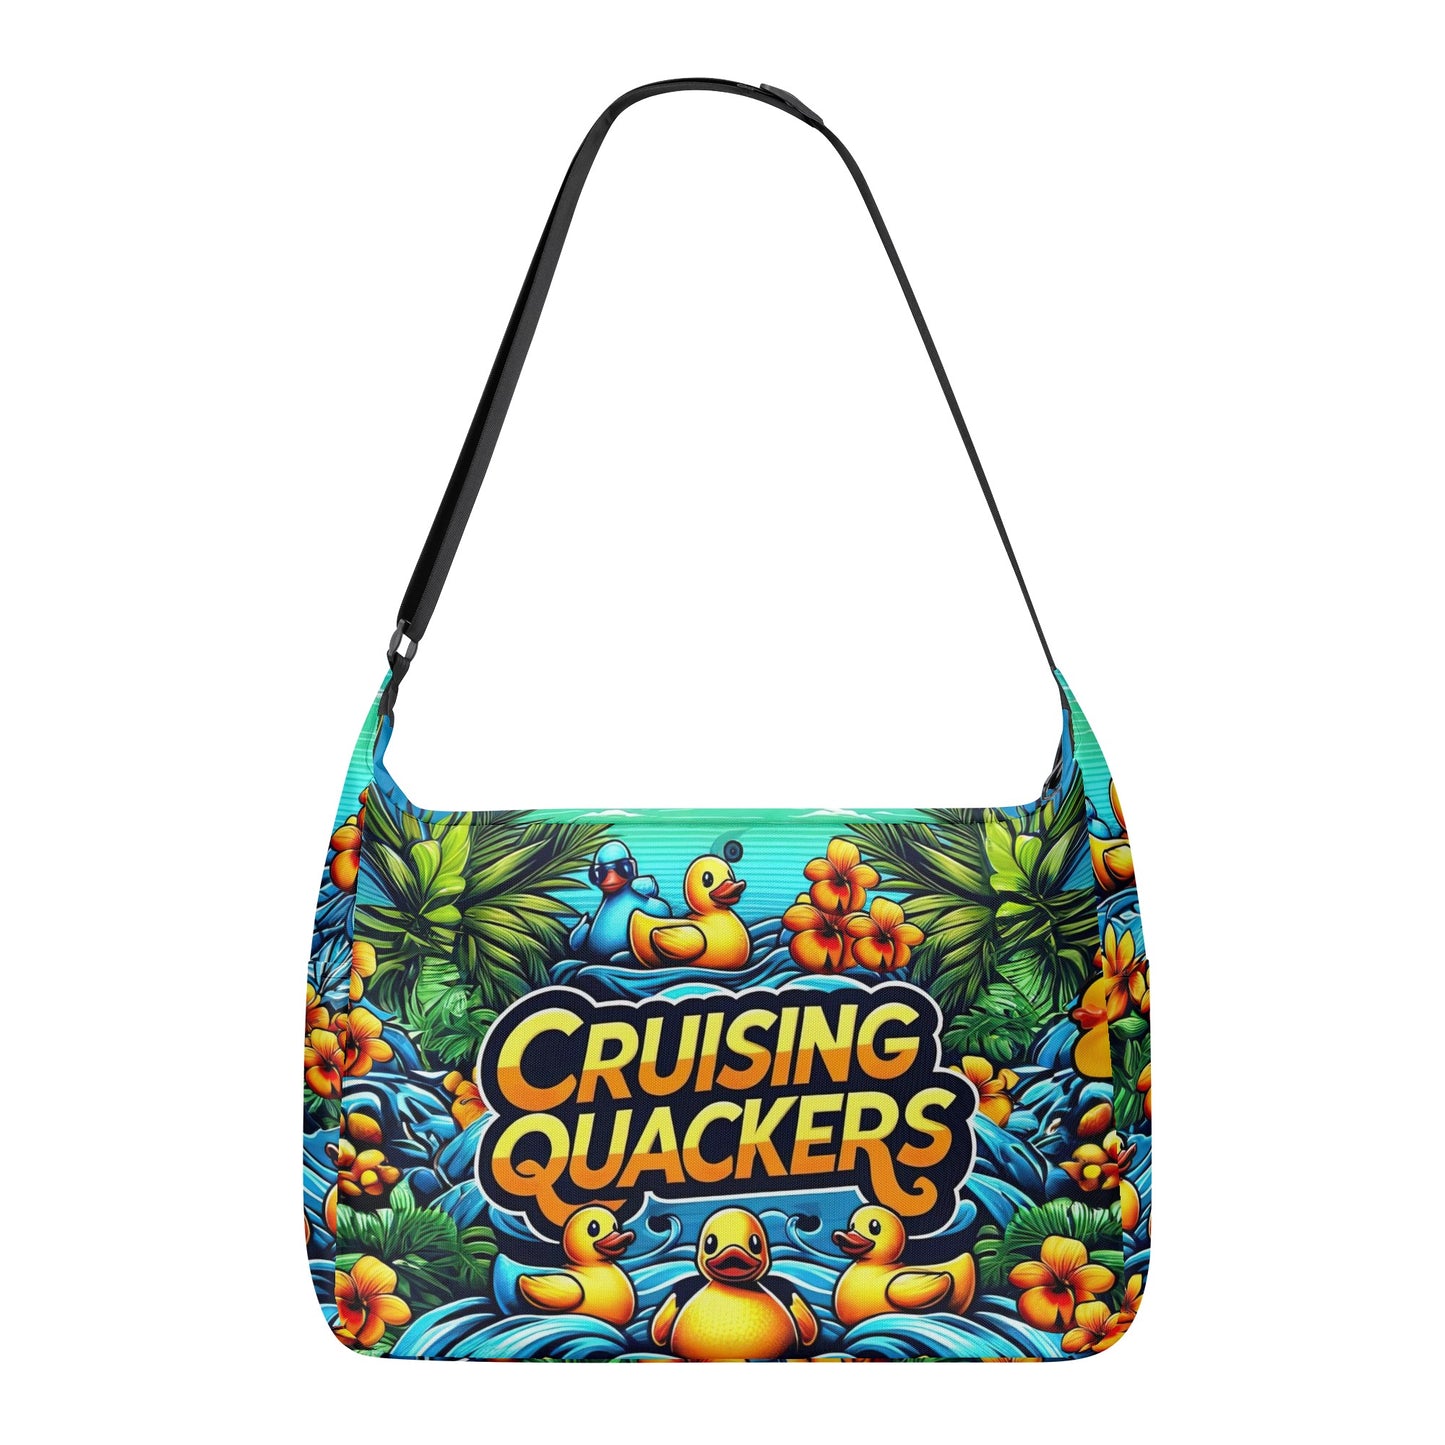 Cruising Quackers Messenger Bag